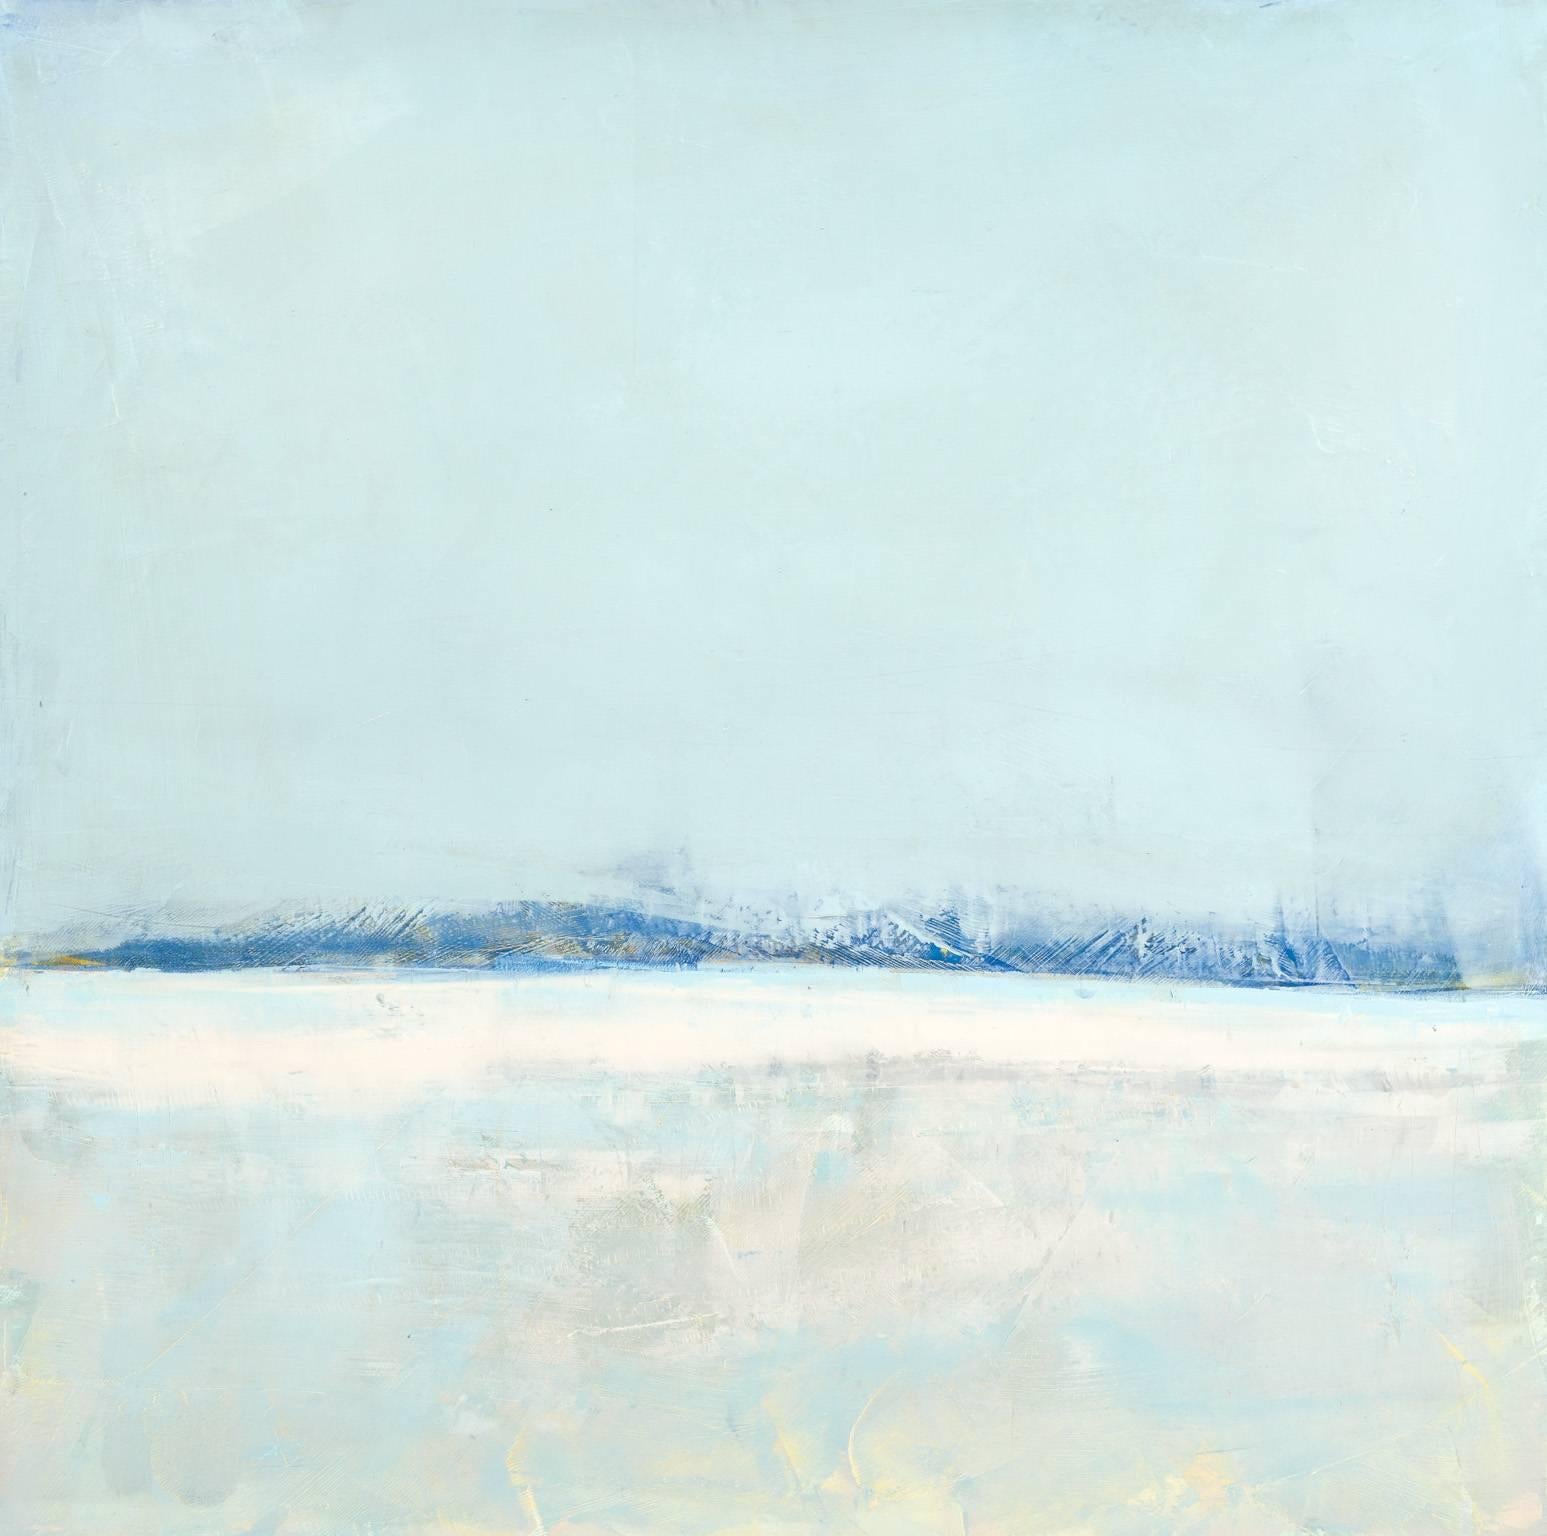 All To Myself LXXXI: Sea Breeze - Painting by Jeff Erickson